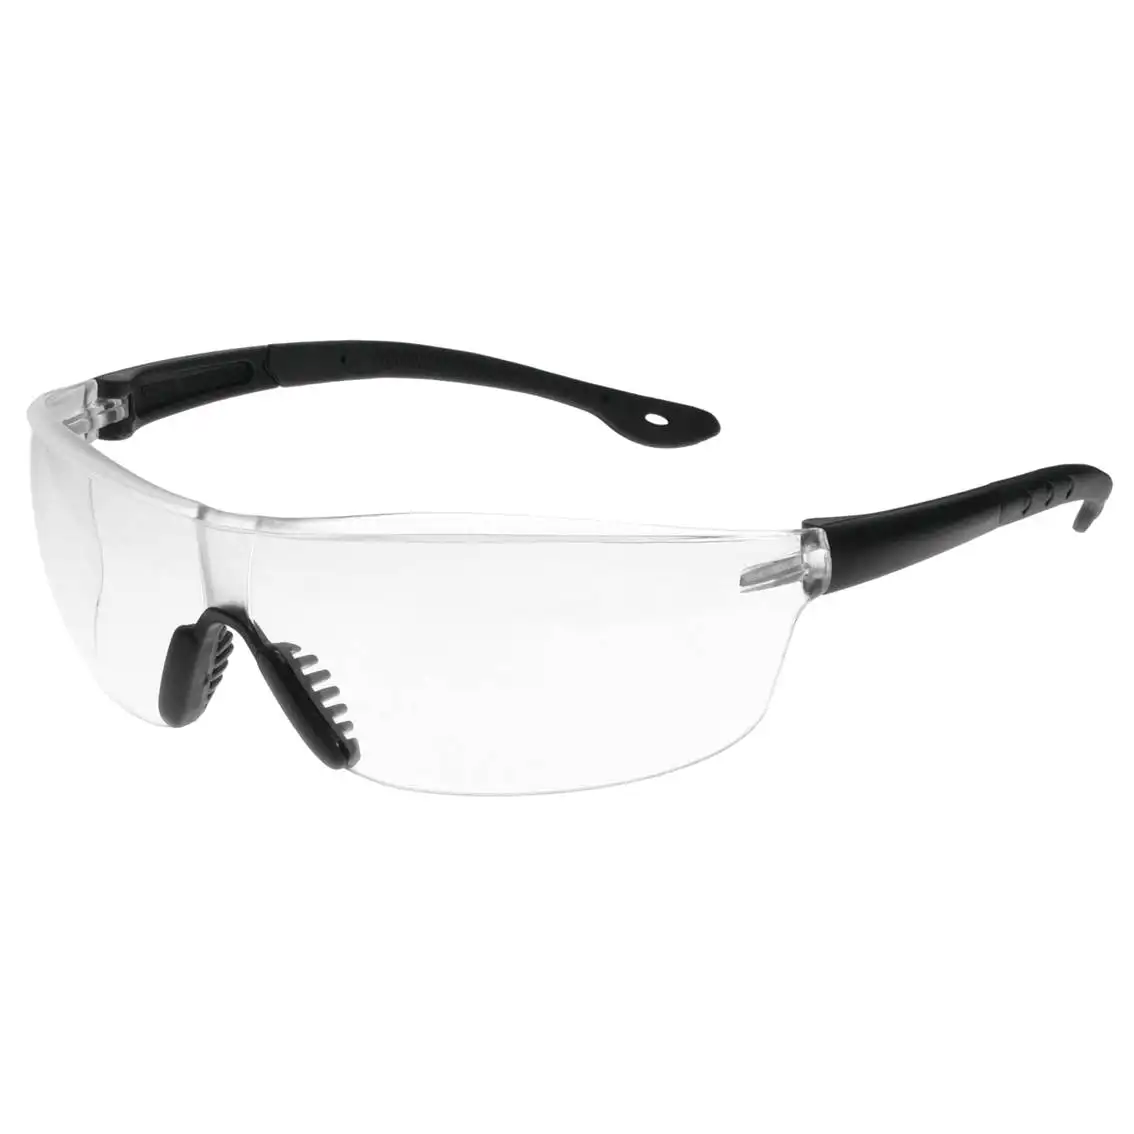 Gafas de seguridad de policarbonato transparente UV 400 protector ocular